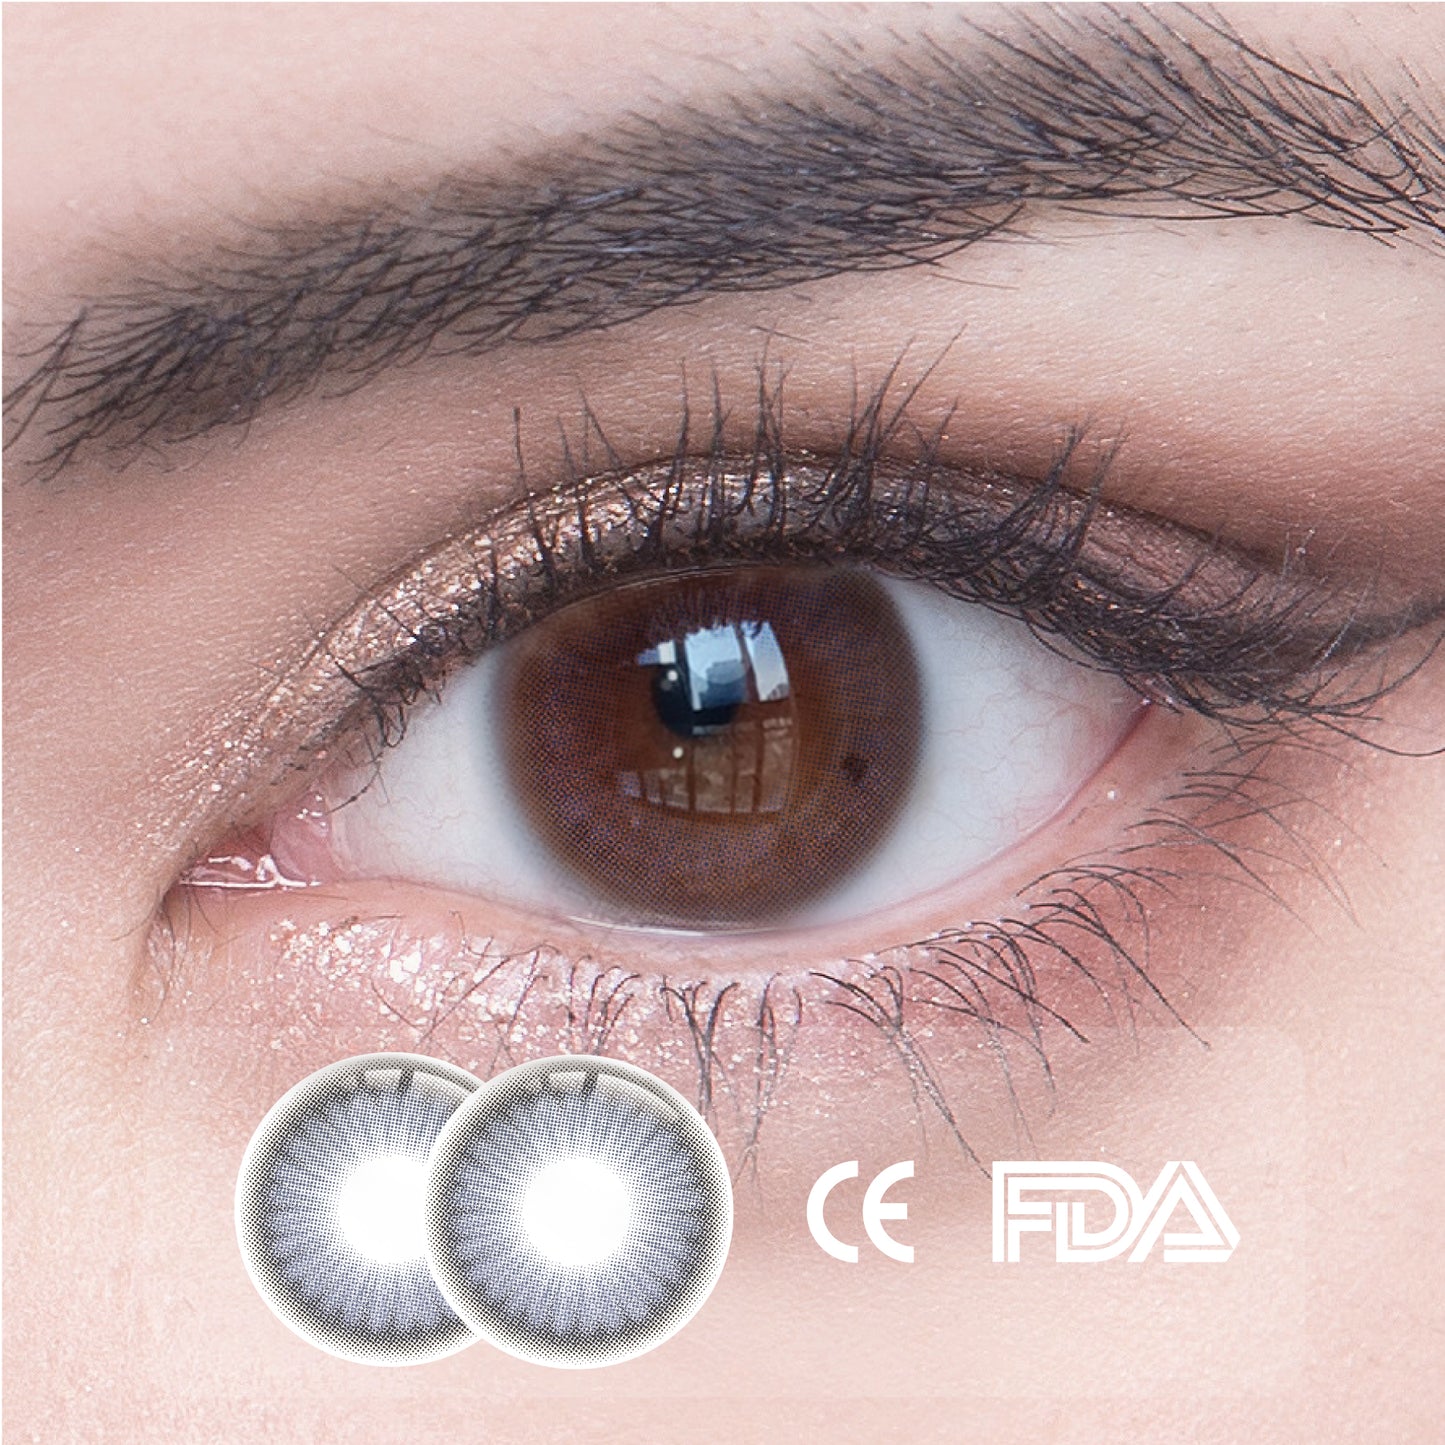 1Pcs FDA Certificate Eyes Colorful Contact Lenses - Rumba blue